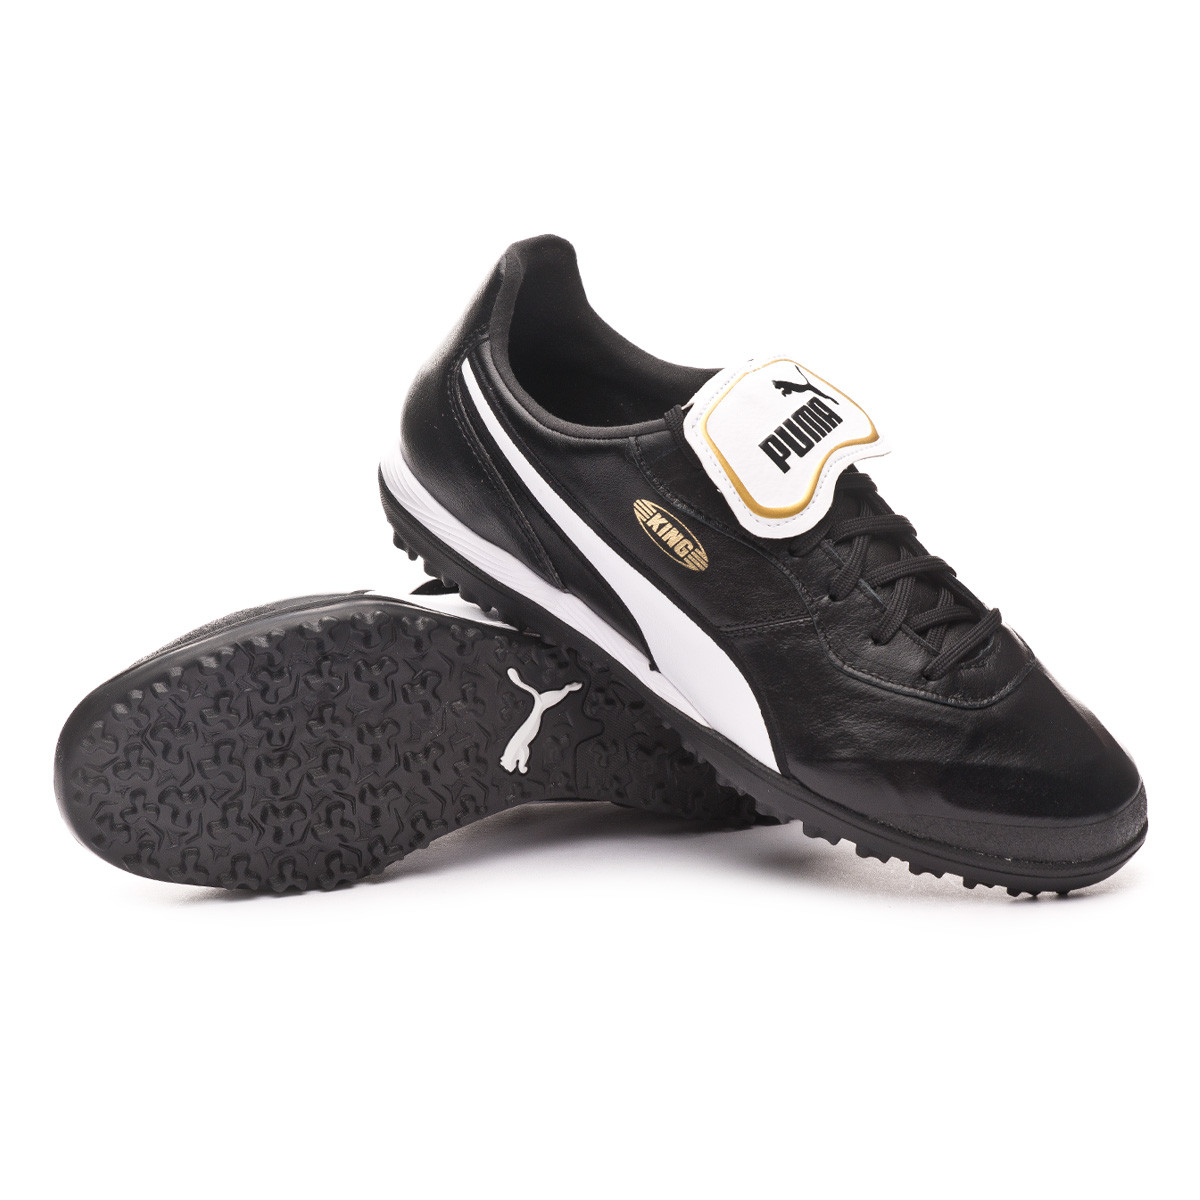 puma king turf soccer shoes